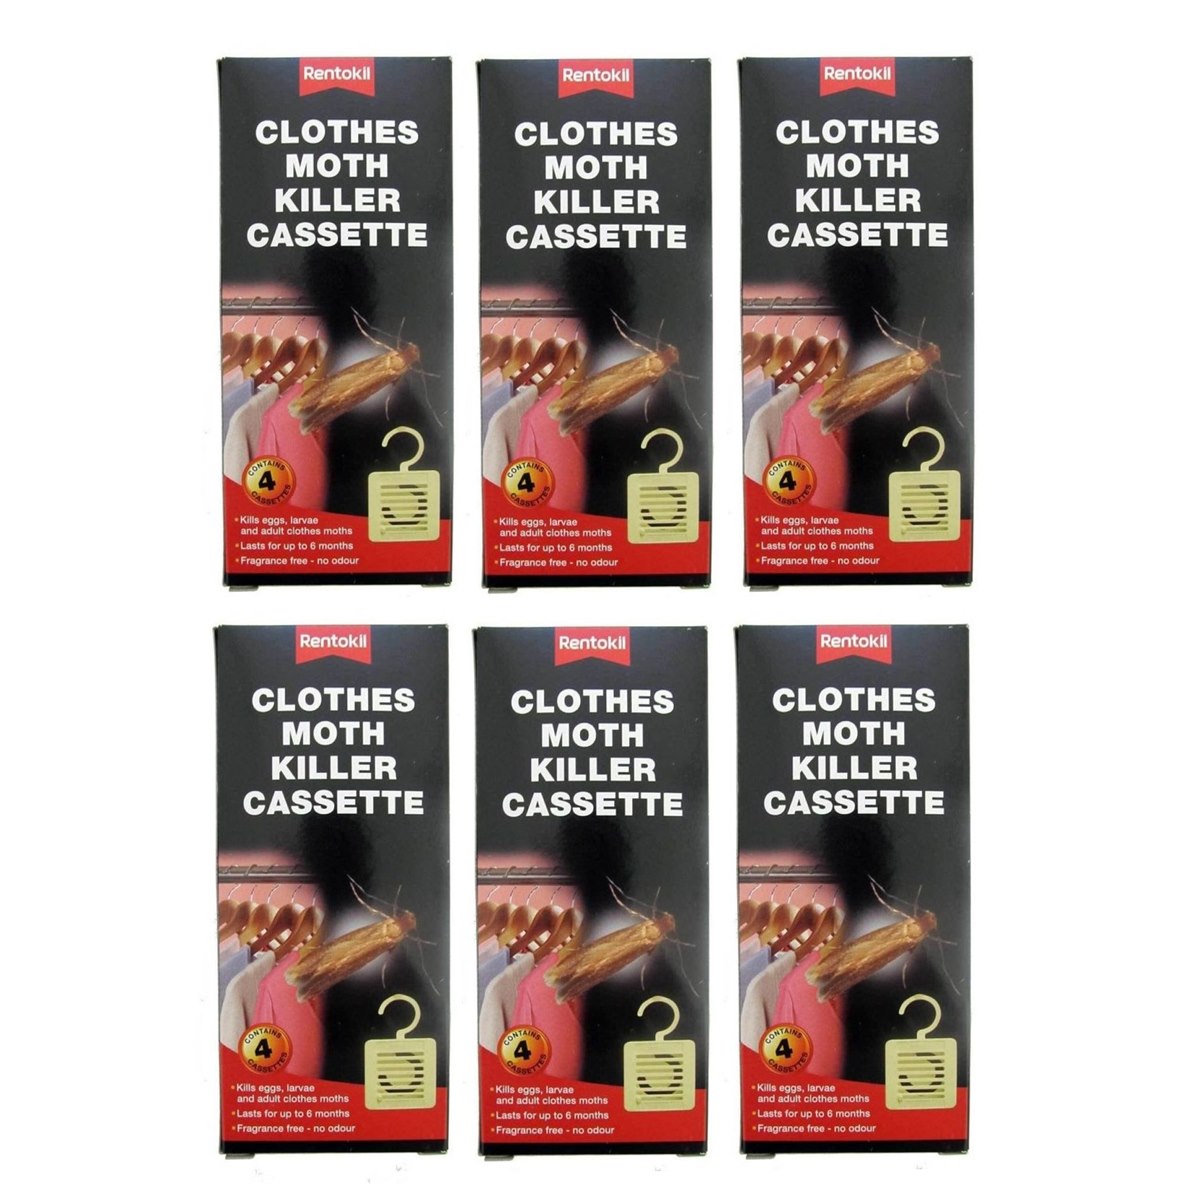 Case of 6 x Rentokil Clothes Moth Killer Cassette Pack of 4